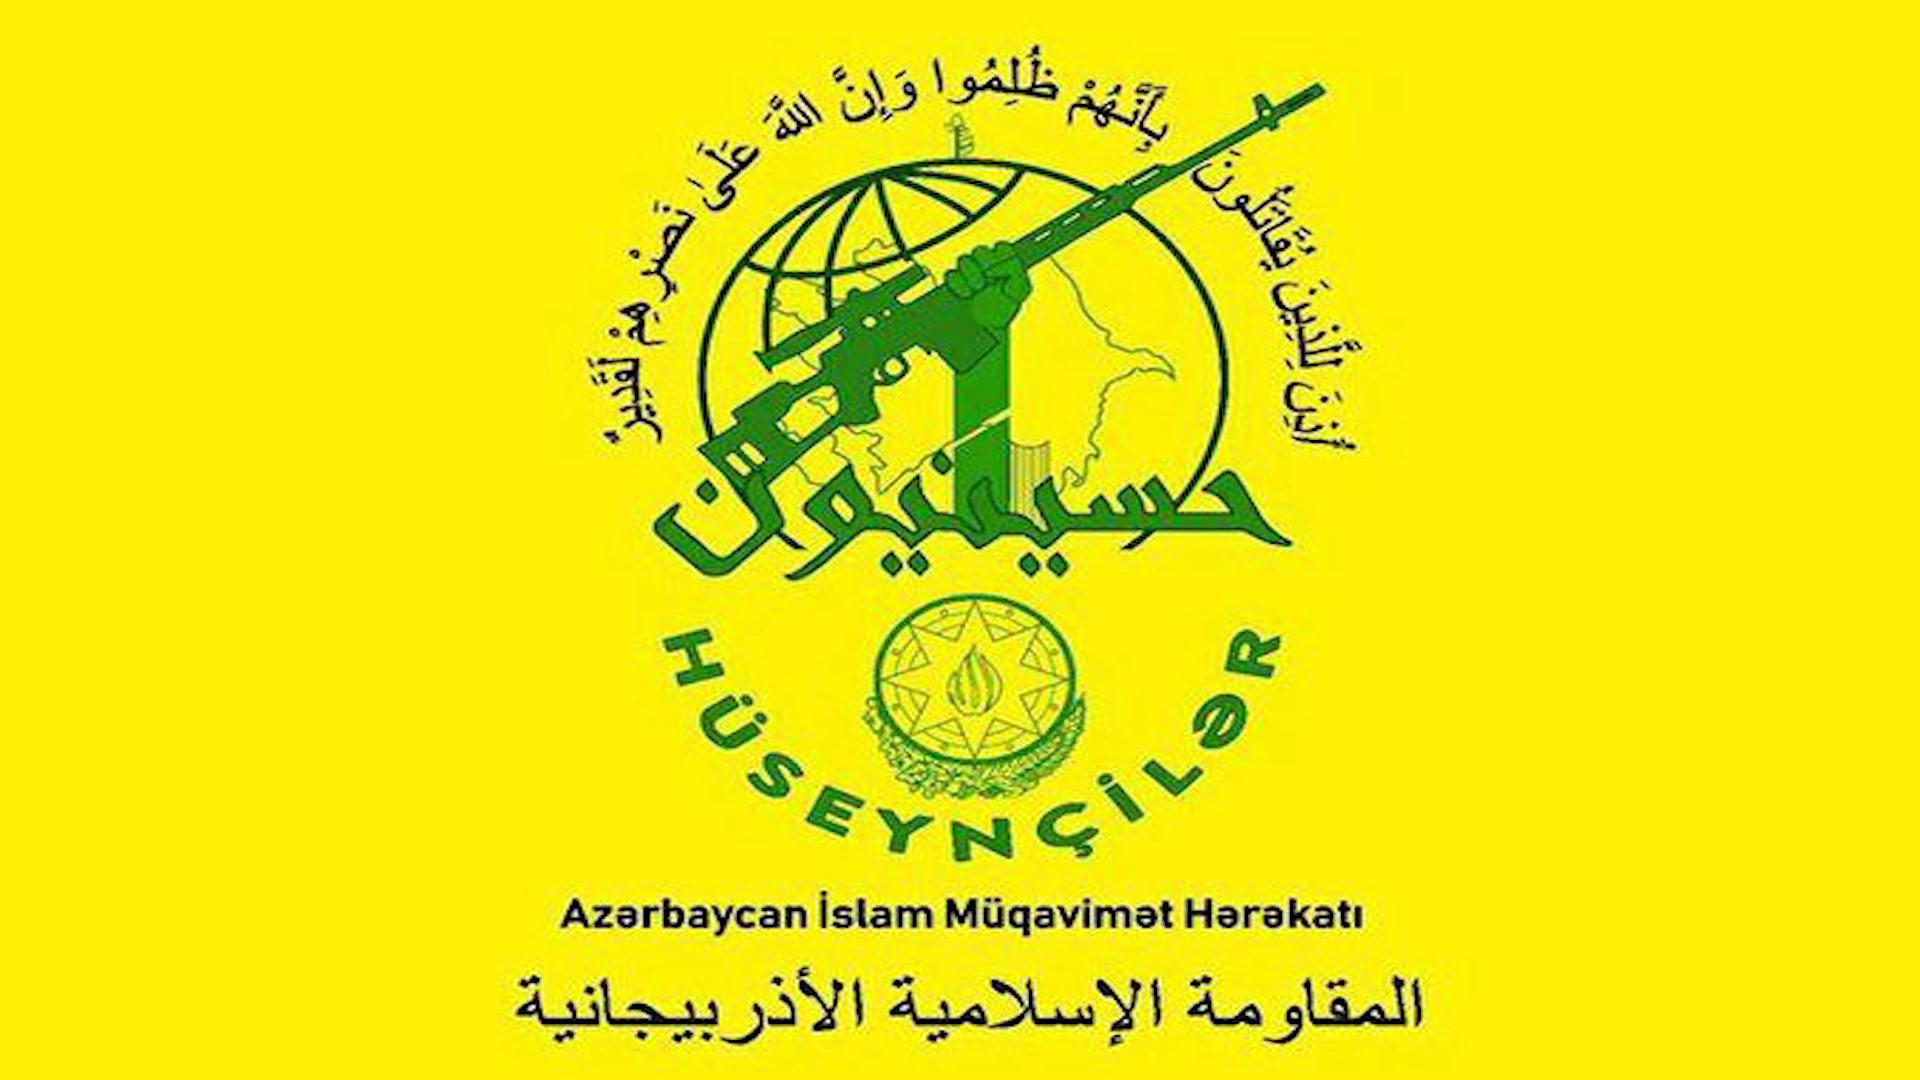 ifmat - Iran forms new IRGC-backed armed militia in Azerbaijan